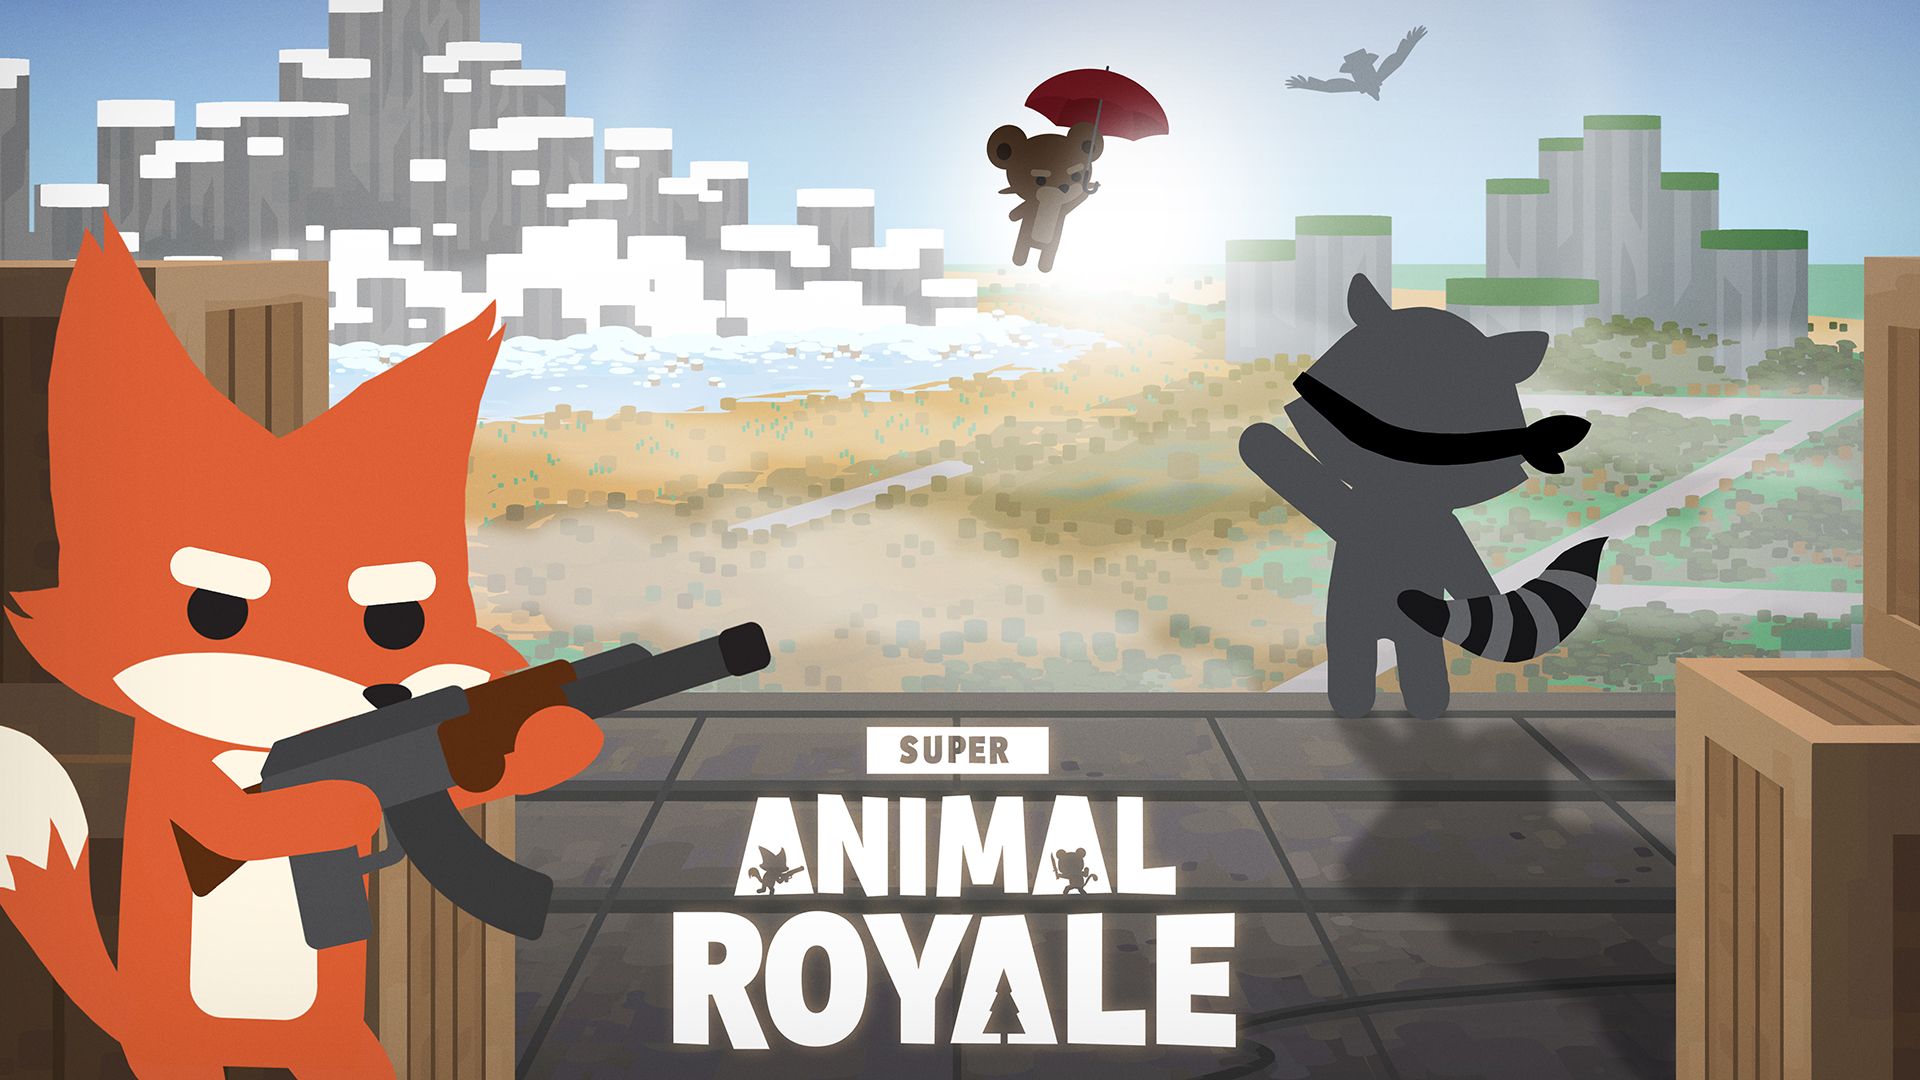 Super Animal Royale llegará a consolas PlayStation